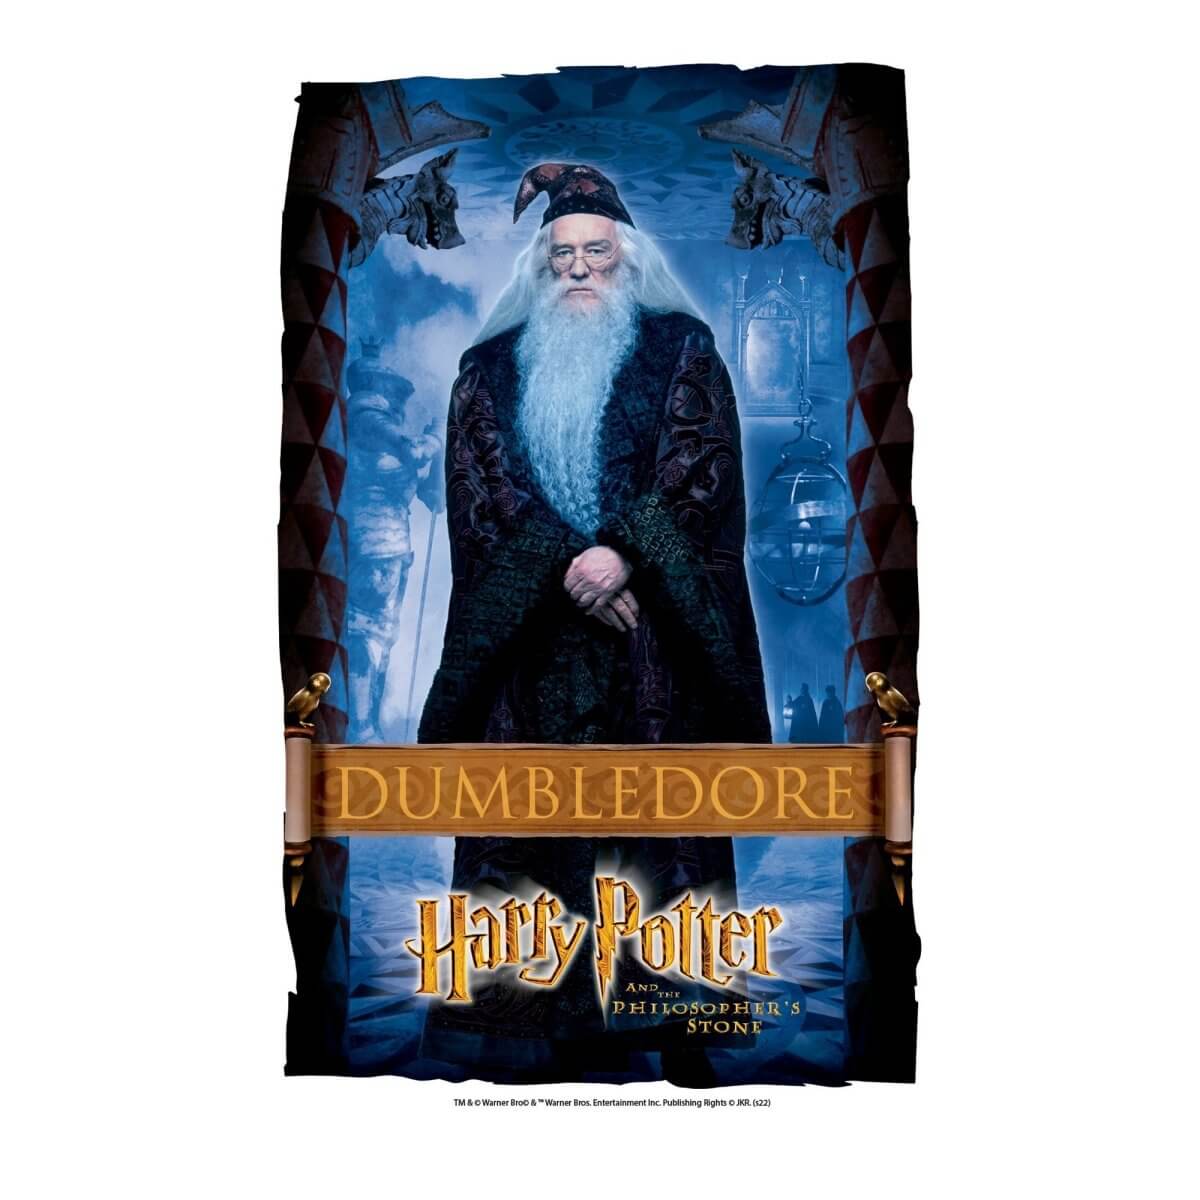 Kismet Decals Harry Potter Dumbledore Poster Licensed Wall Sticker - Easy DIY Home & Kids Room Decor Wall Decal Art - Kismet Decals